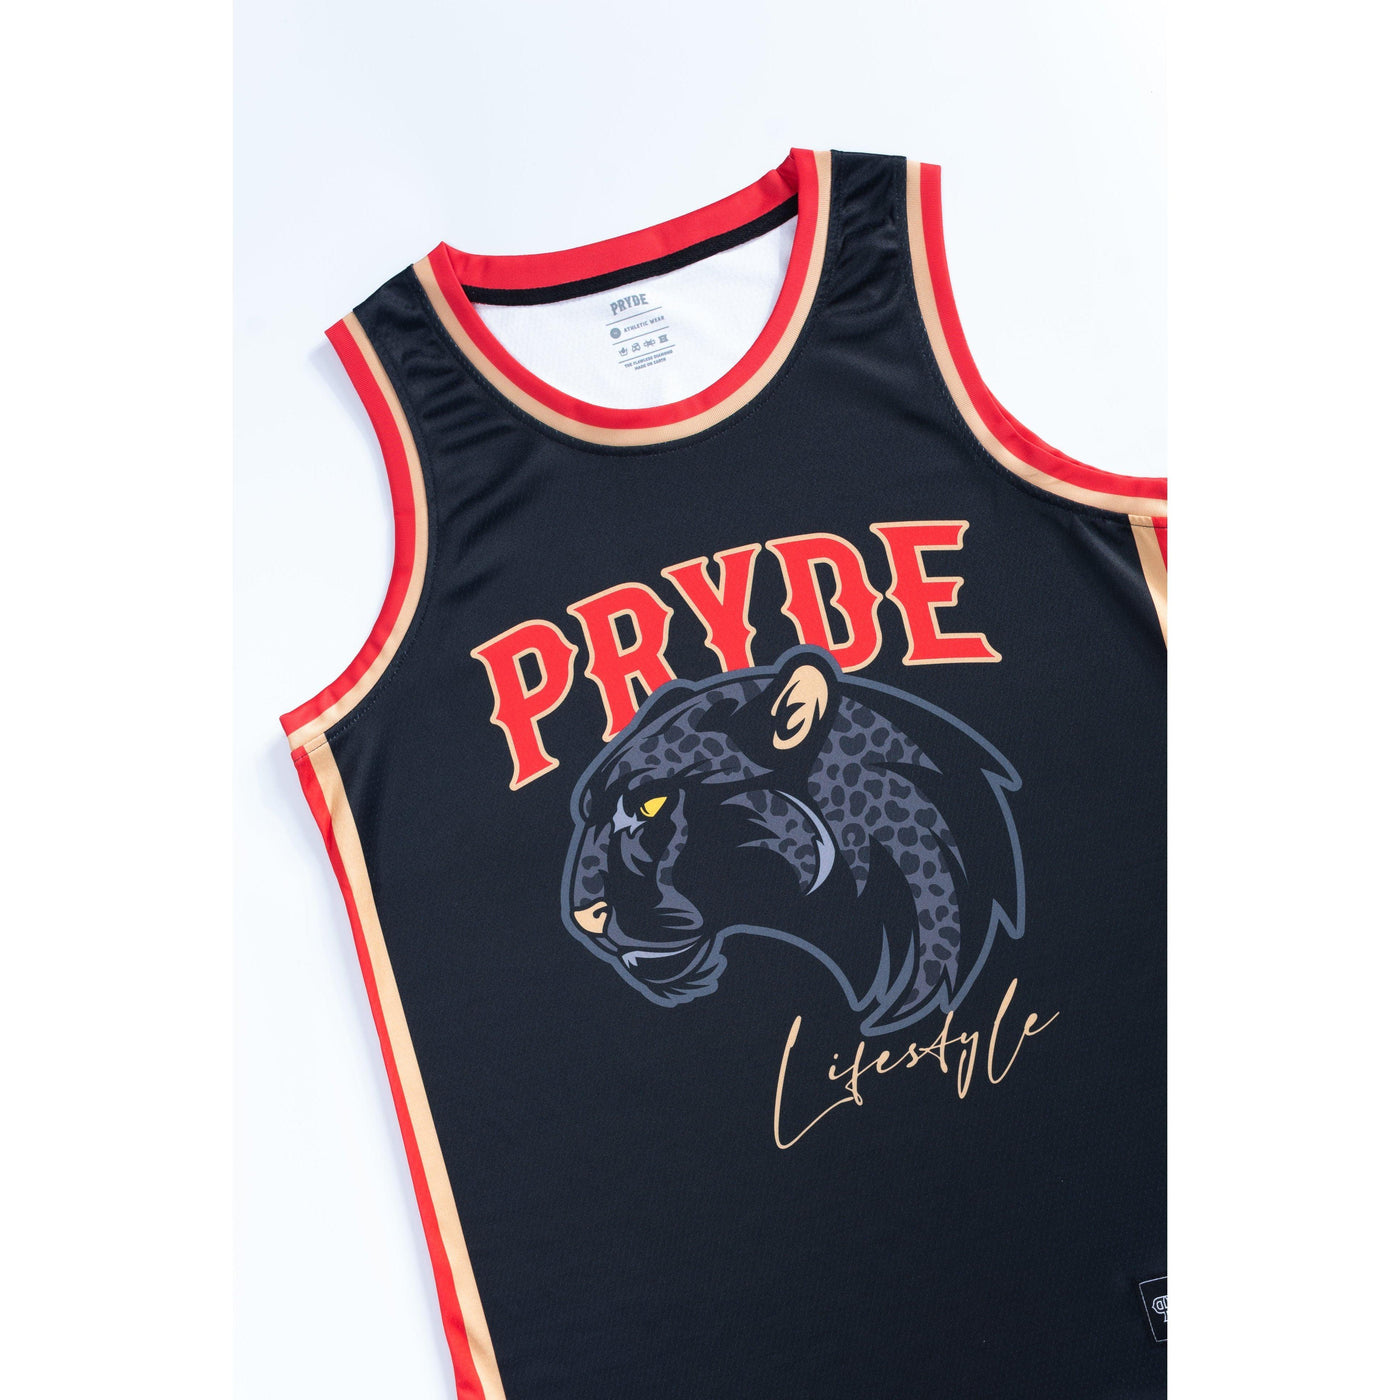 PRYDE Leopard Jersey - Black, Red & Gold - Muay Thailand